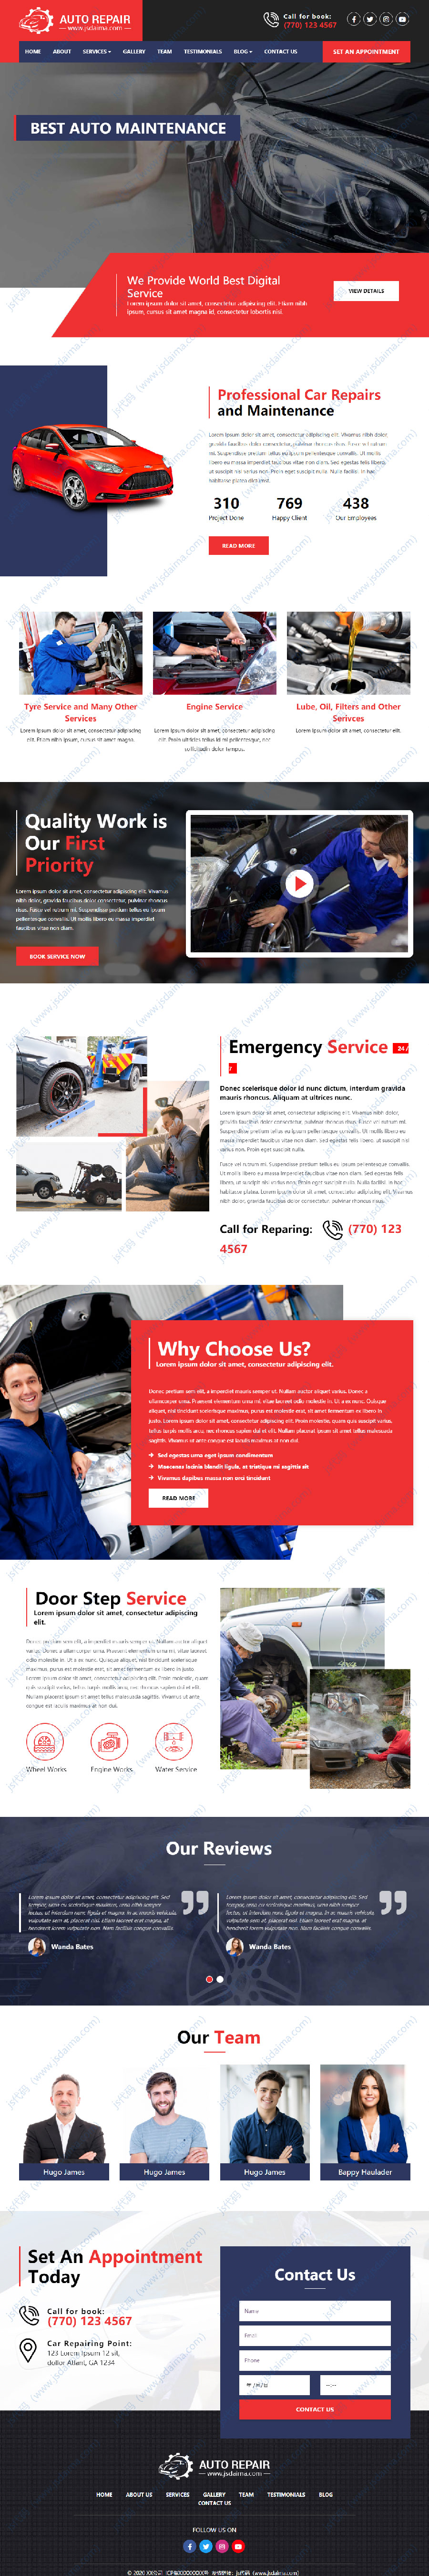 HTML5响应式4S汽车维修保养服务公司网站模板